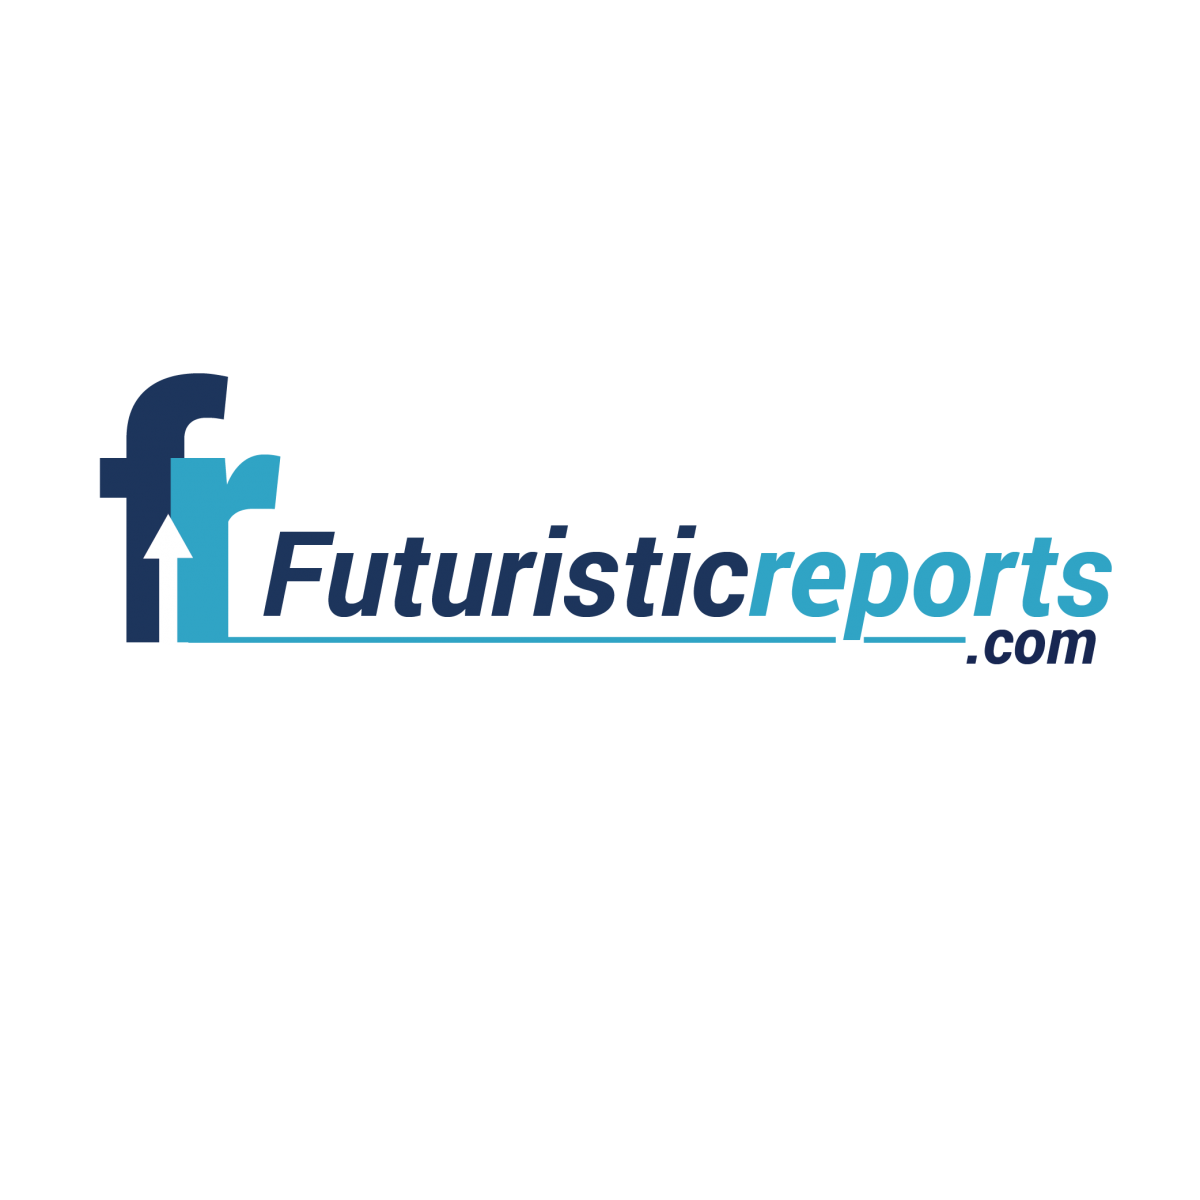 futuristicreports.com_logo-01